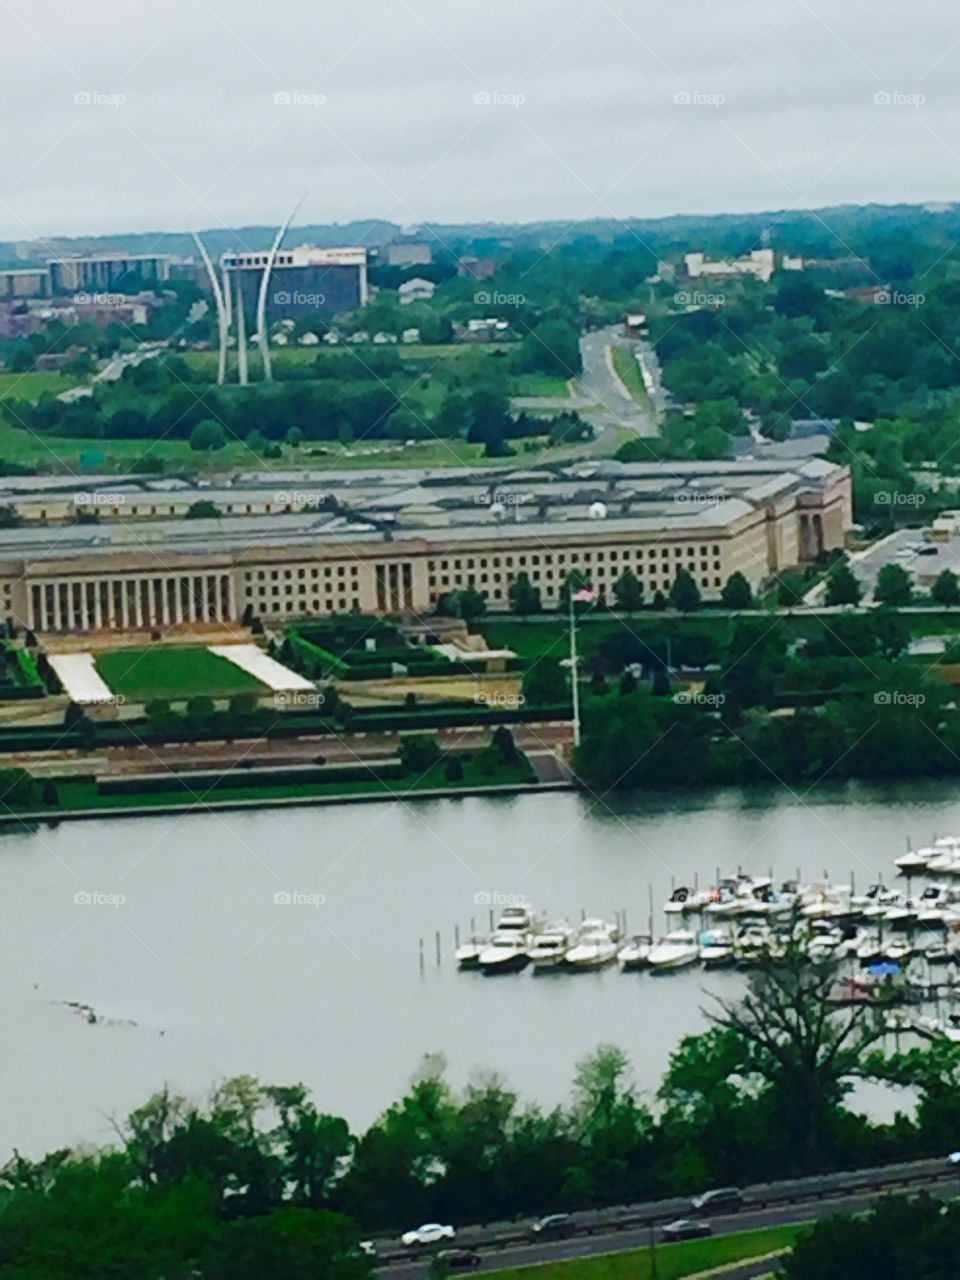 Aerial view of The Pentagon, Potomac River
Washington, DC